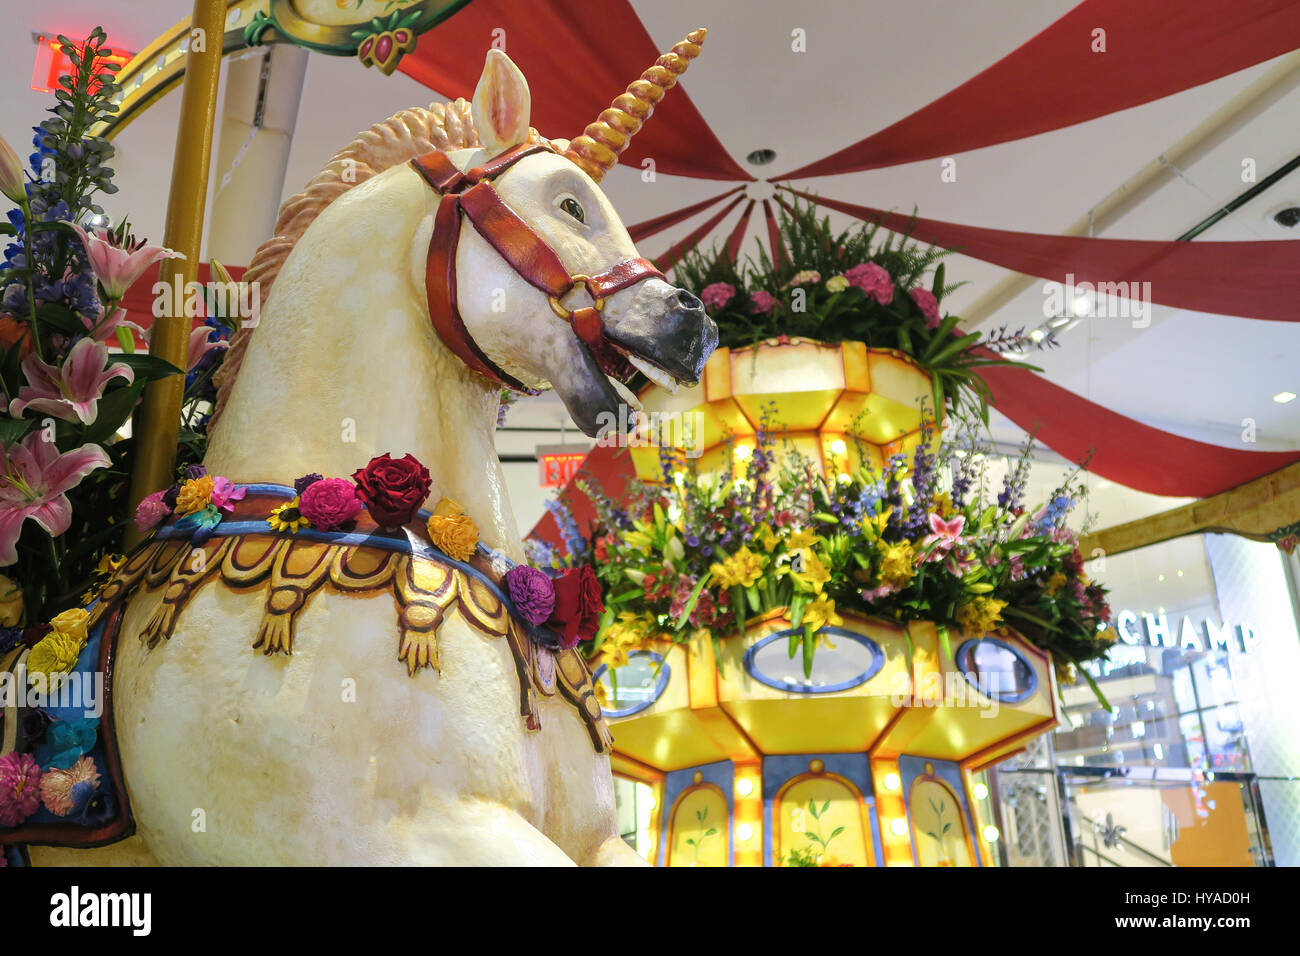 Macys Karneval unter dem Motto Flower Show am Herald Square, NYC, USA Stockfoto